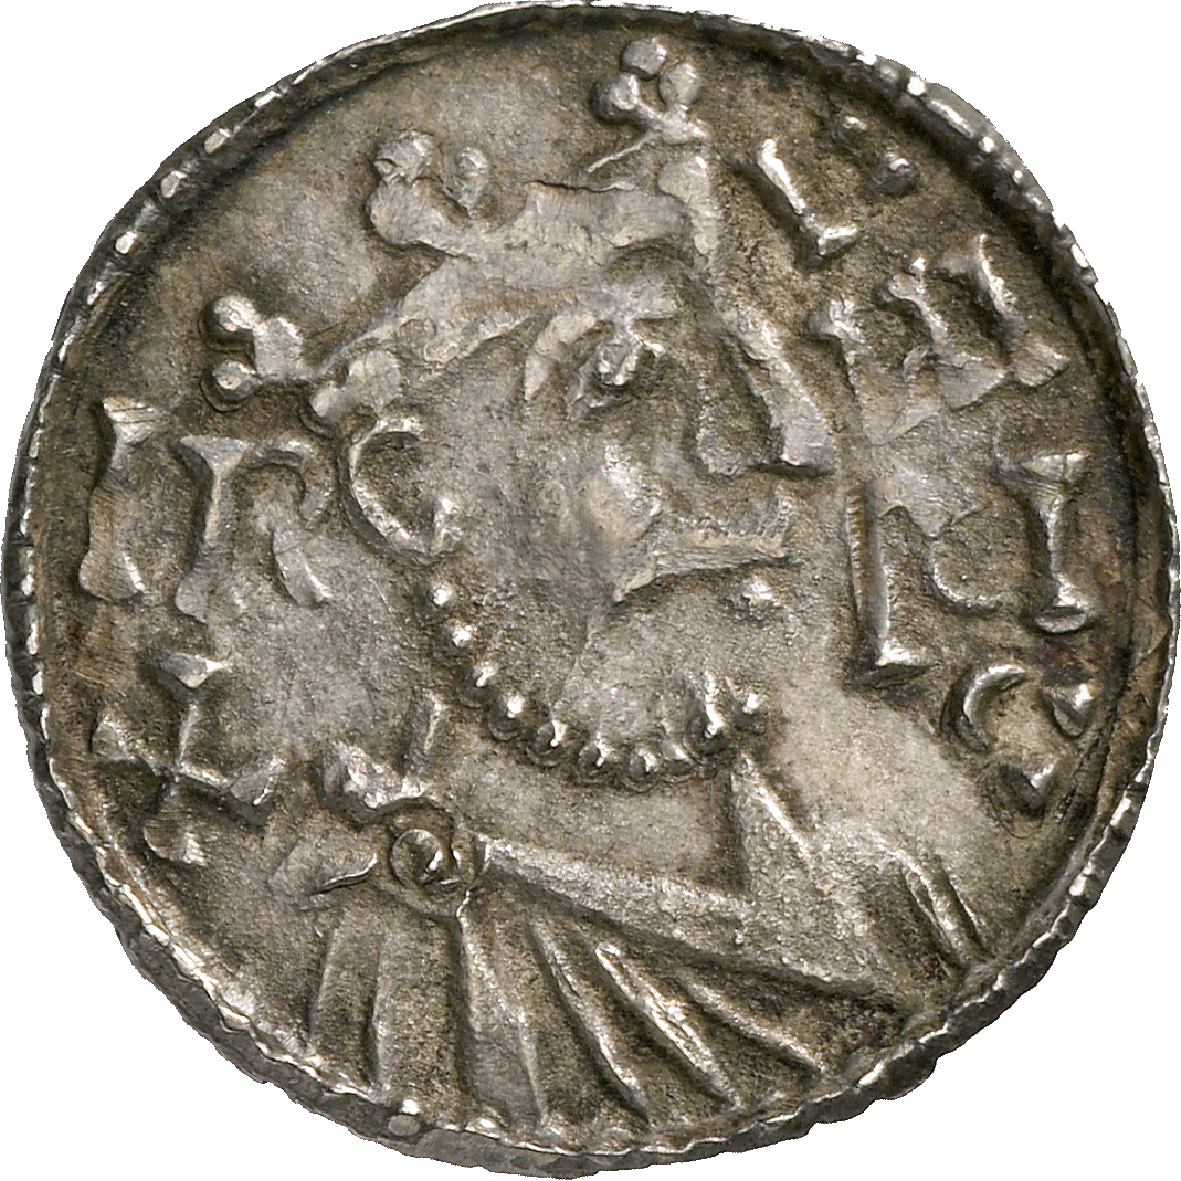 Holy Roman Empire, Henry II the Saint, Pfennig (obverse)